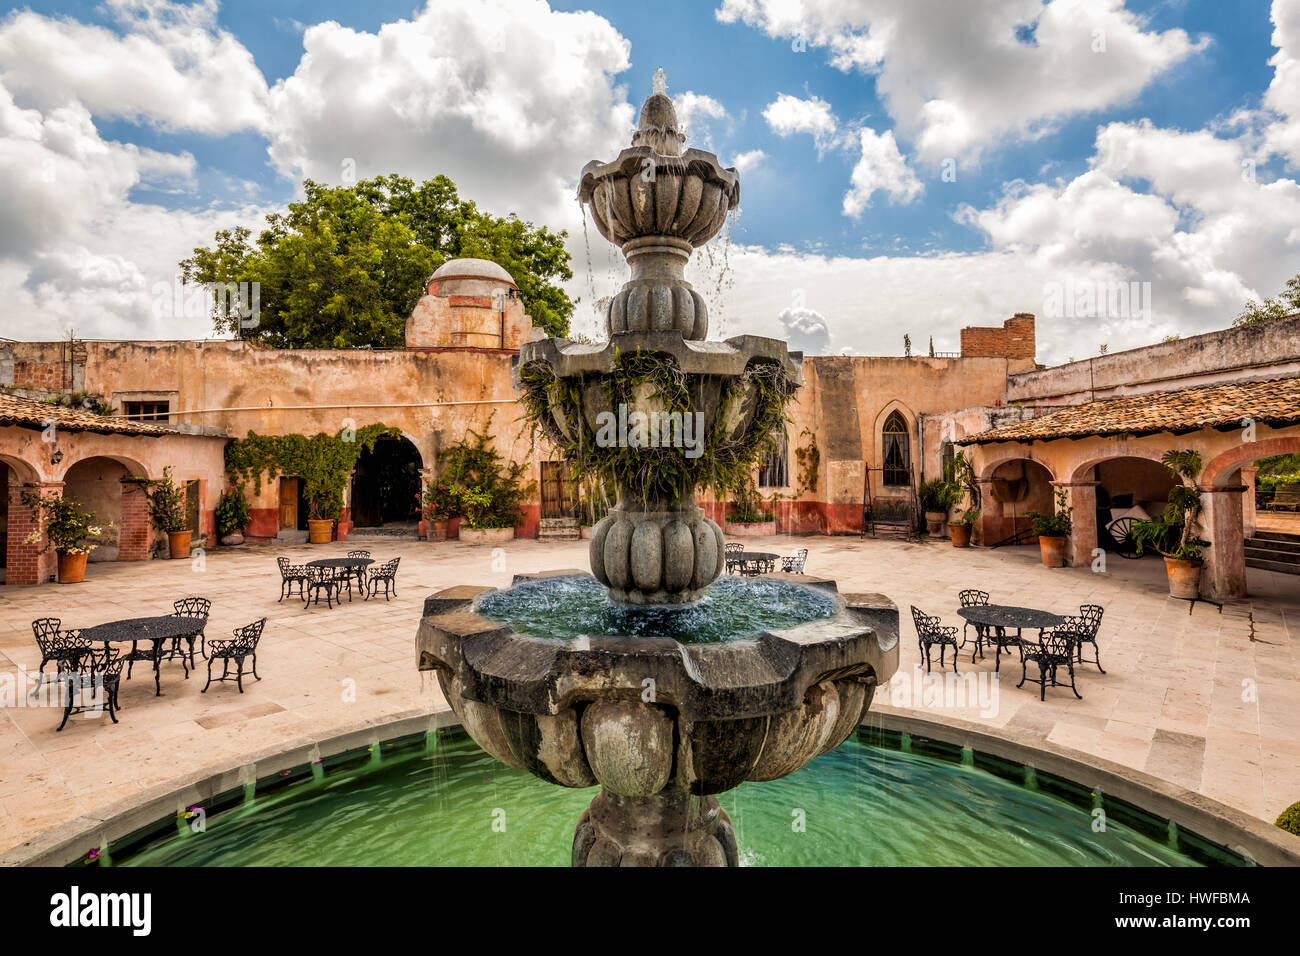 Fountain and courtyard at Las Trancas hacienda in Guanajuato, Mexico. Stock Photo